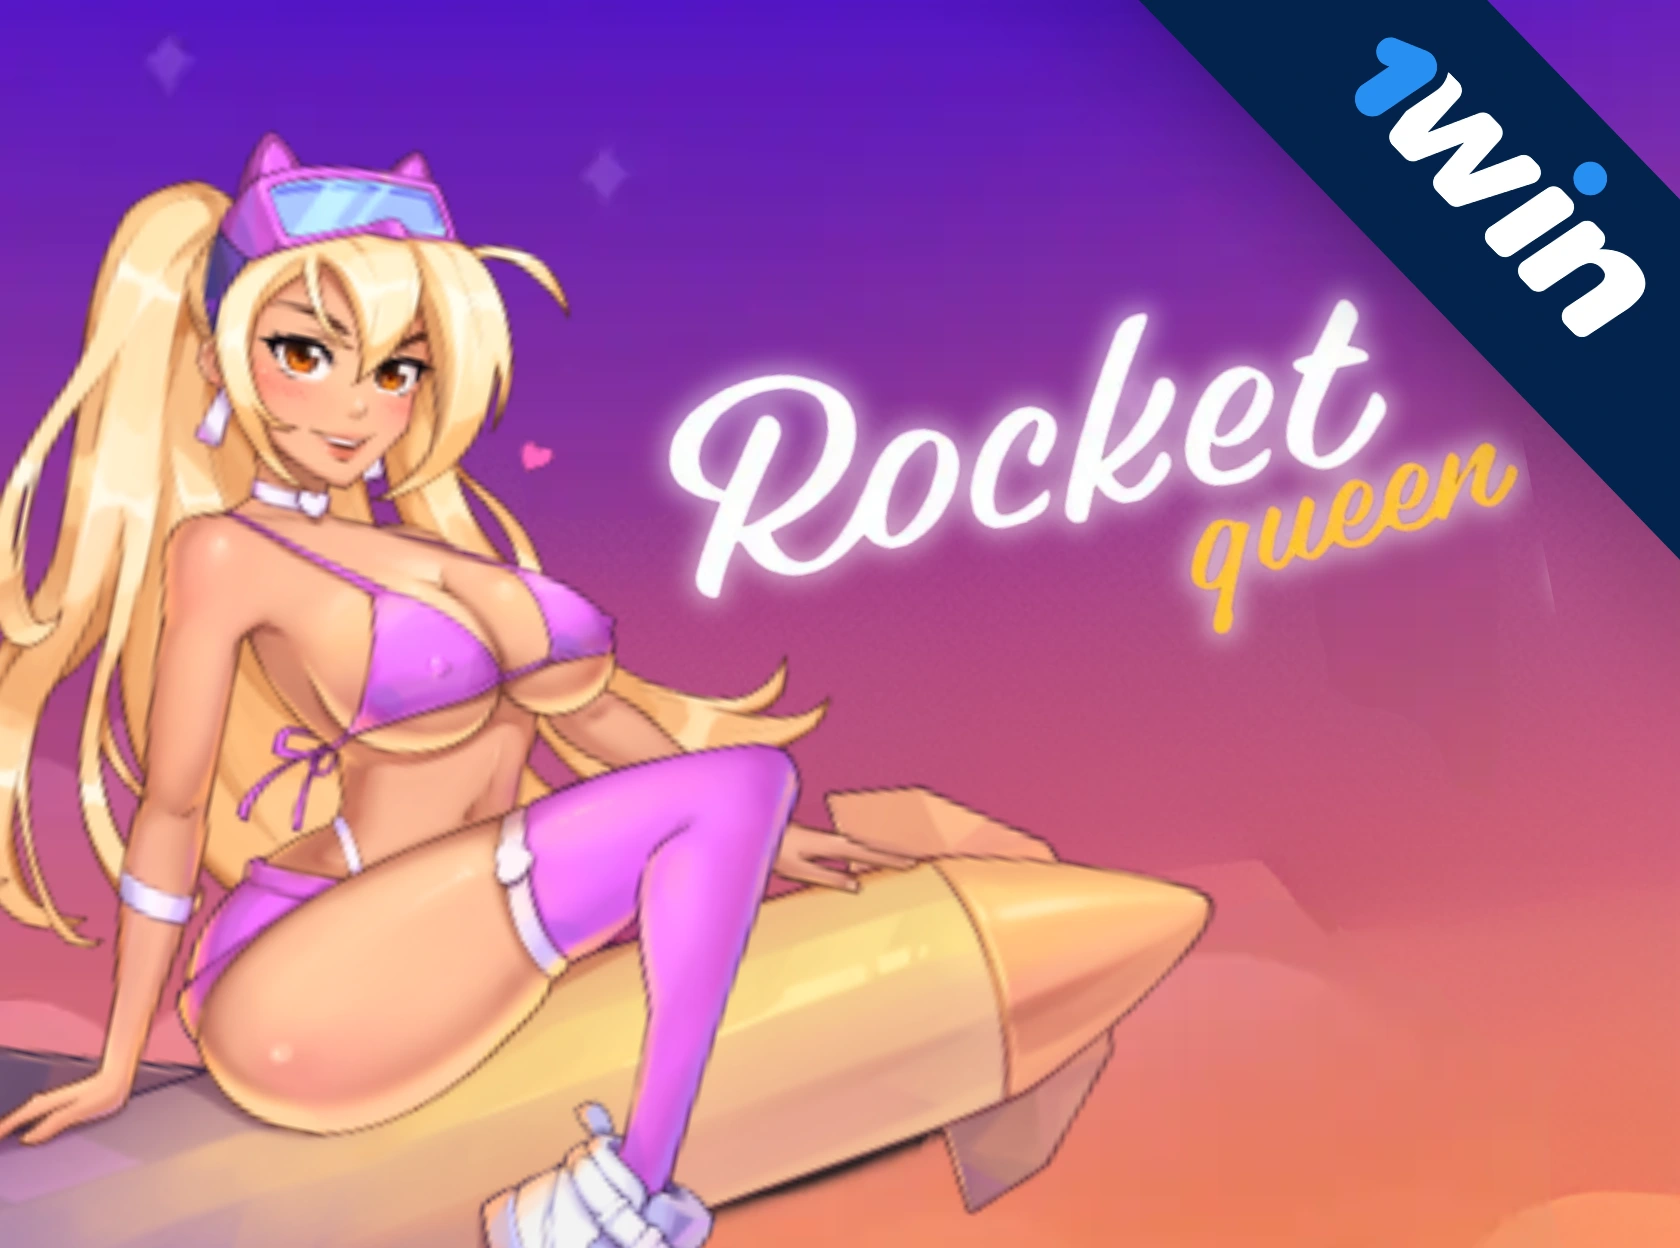 Rocket Queen - golpe explosivo do 1win!